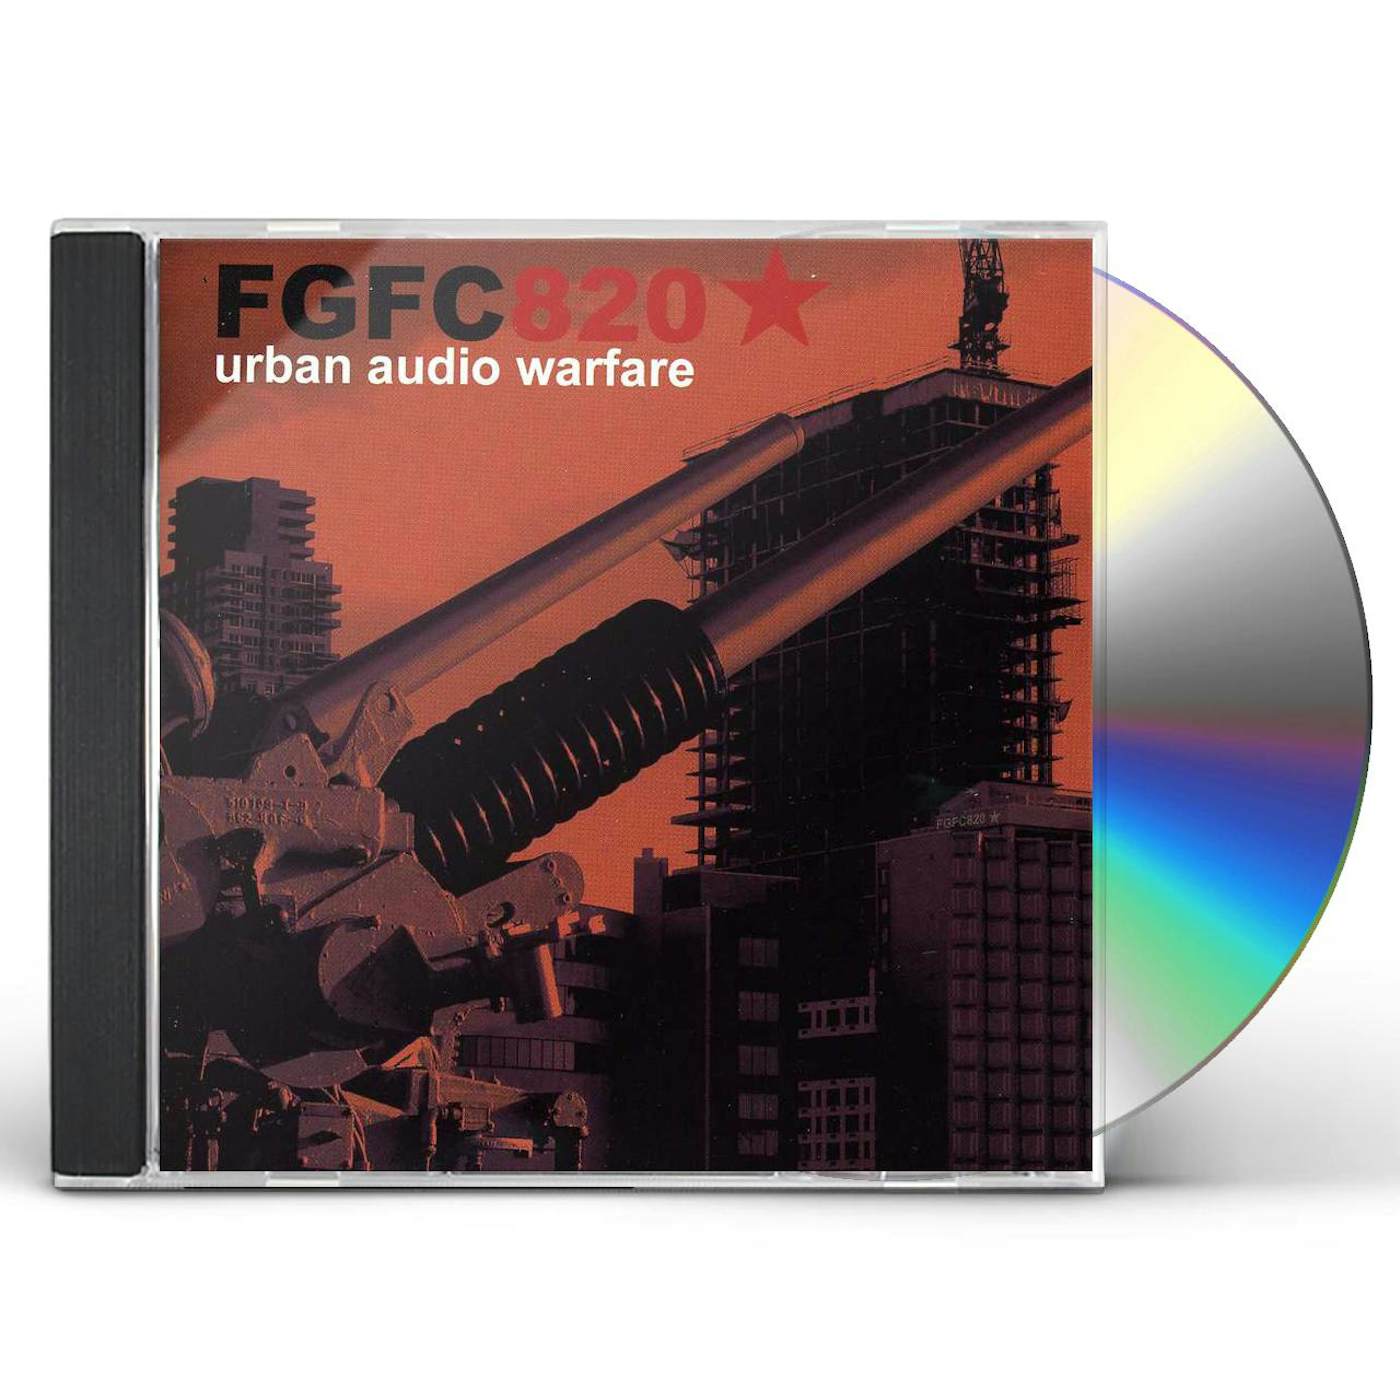 FGFC820 URBAN AUDIO WARFARE CD